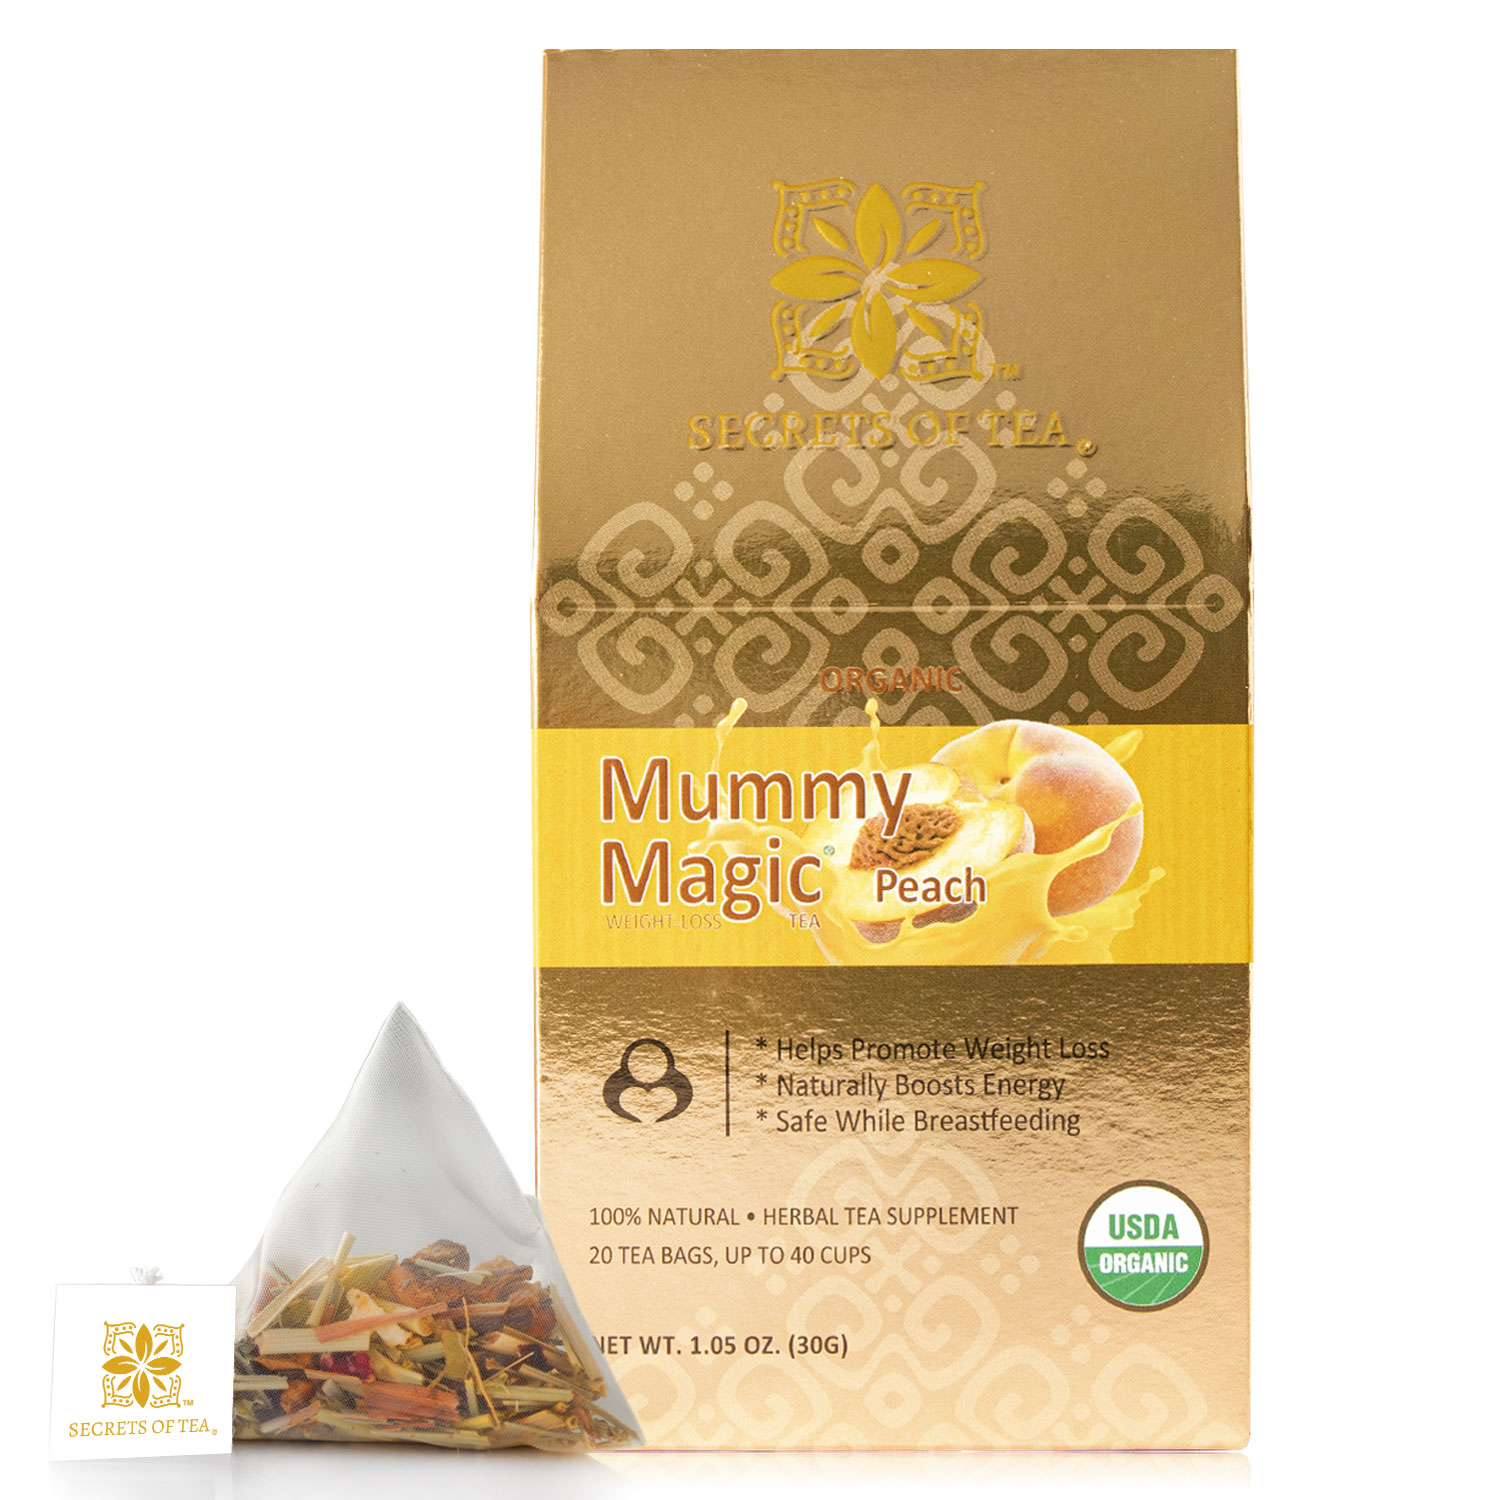 Secrets of Tea Mummy Magic Weight-Loss Peach Tea 2 innerpacks per case 2.0 oz